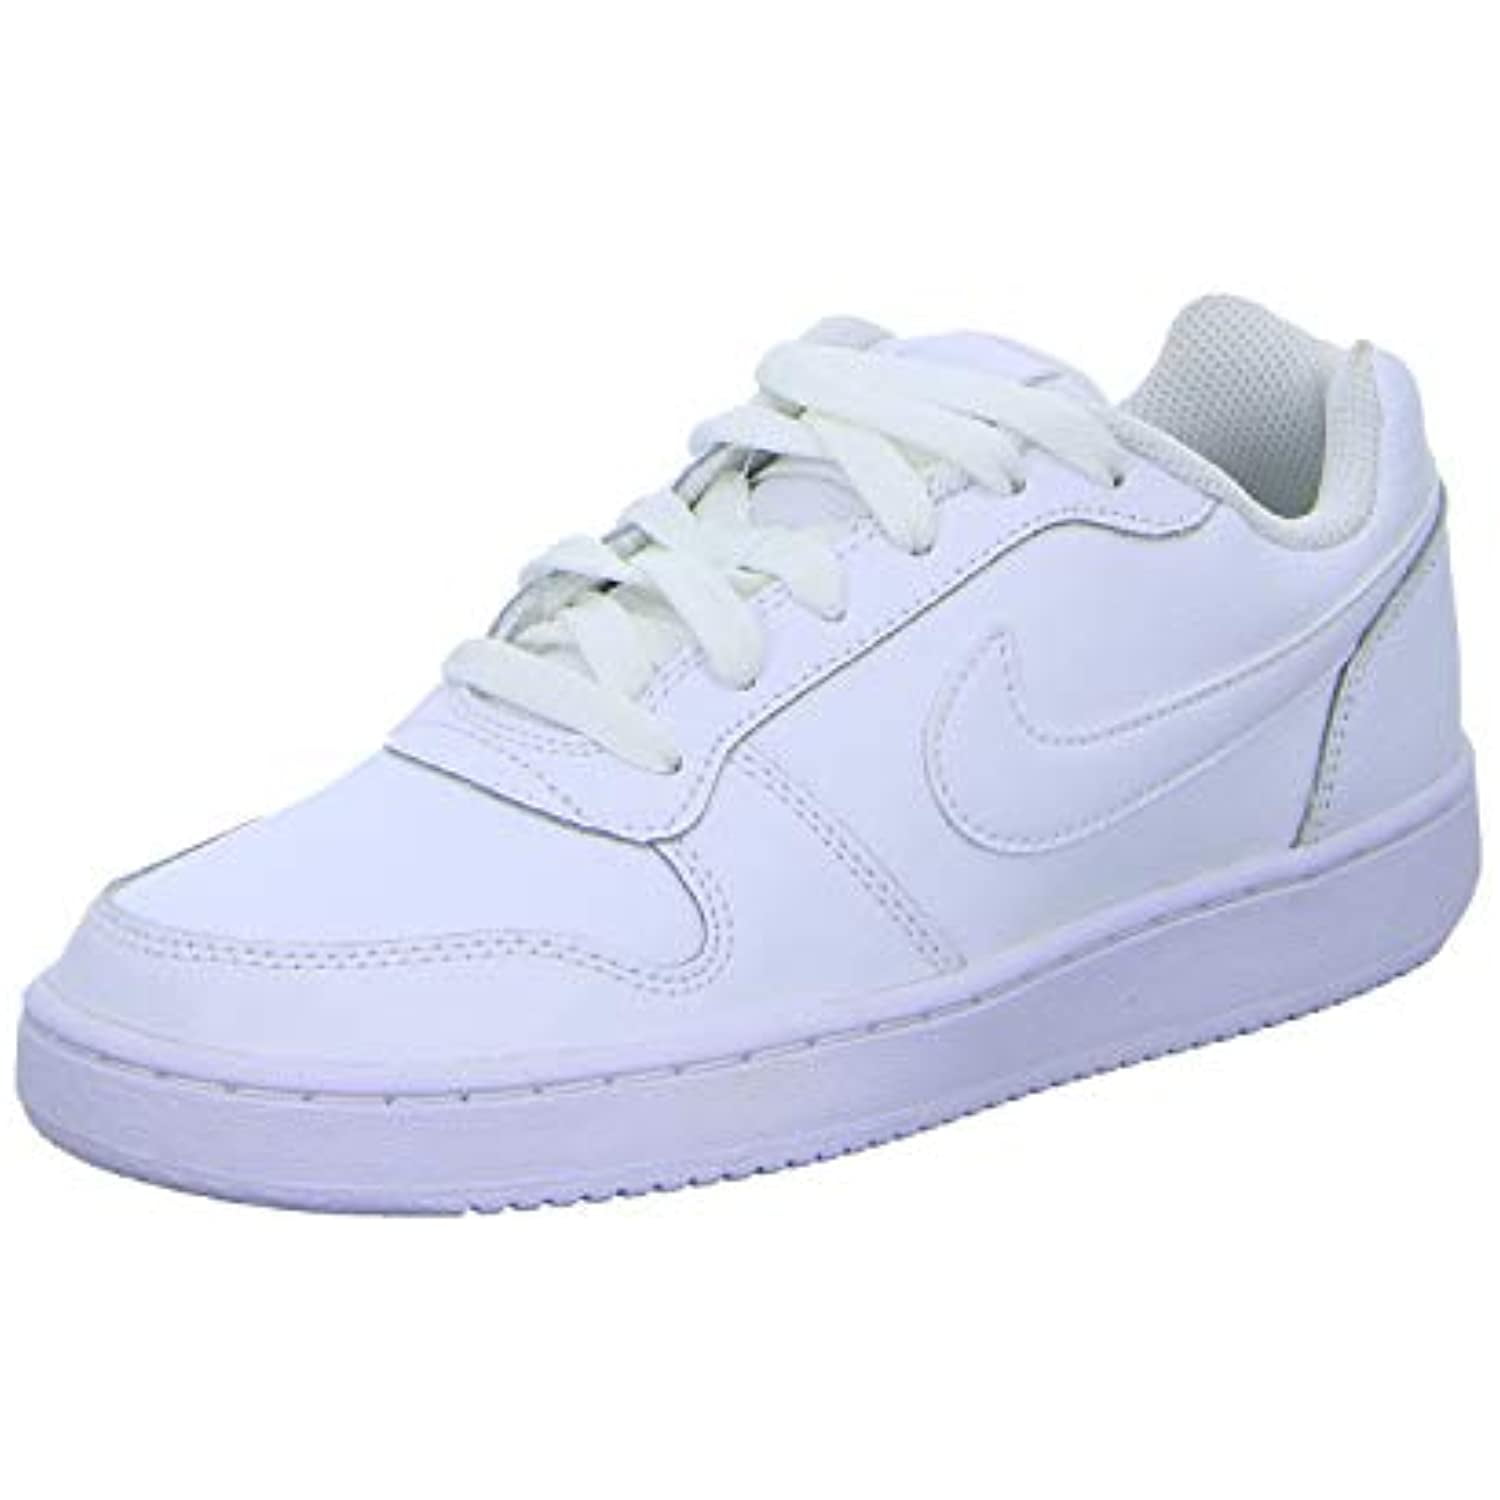 Nike Low Women's White Sneakers 8M - Walmart.com